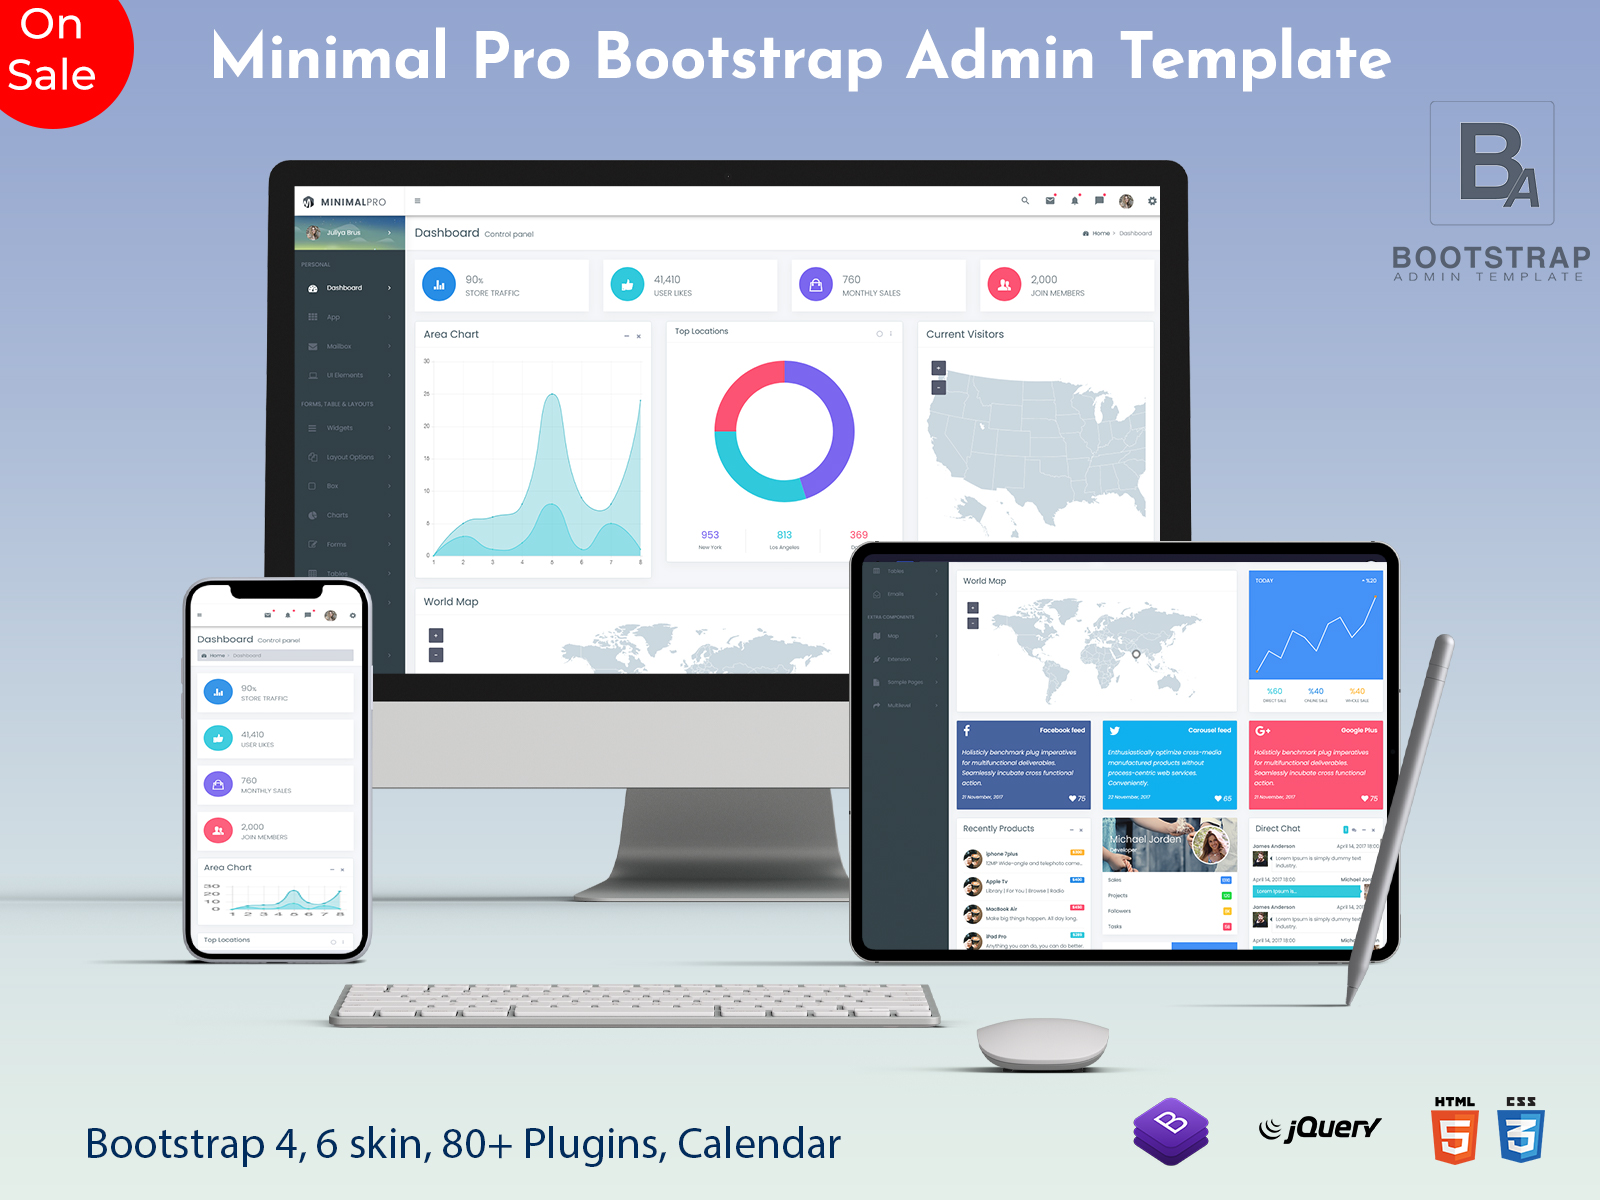 Premium Admin Template With Bootstrap Admin Web App – Minimal Pro